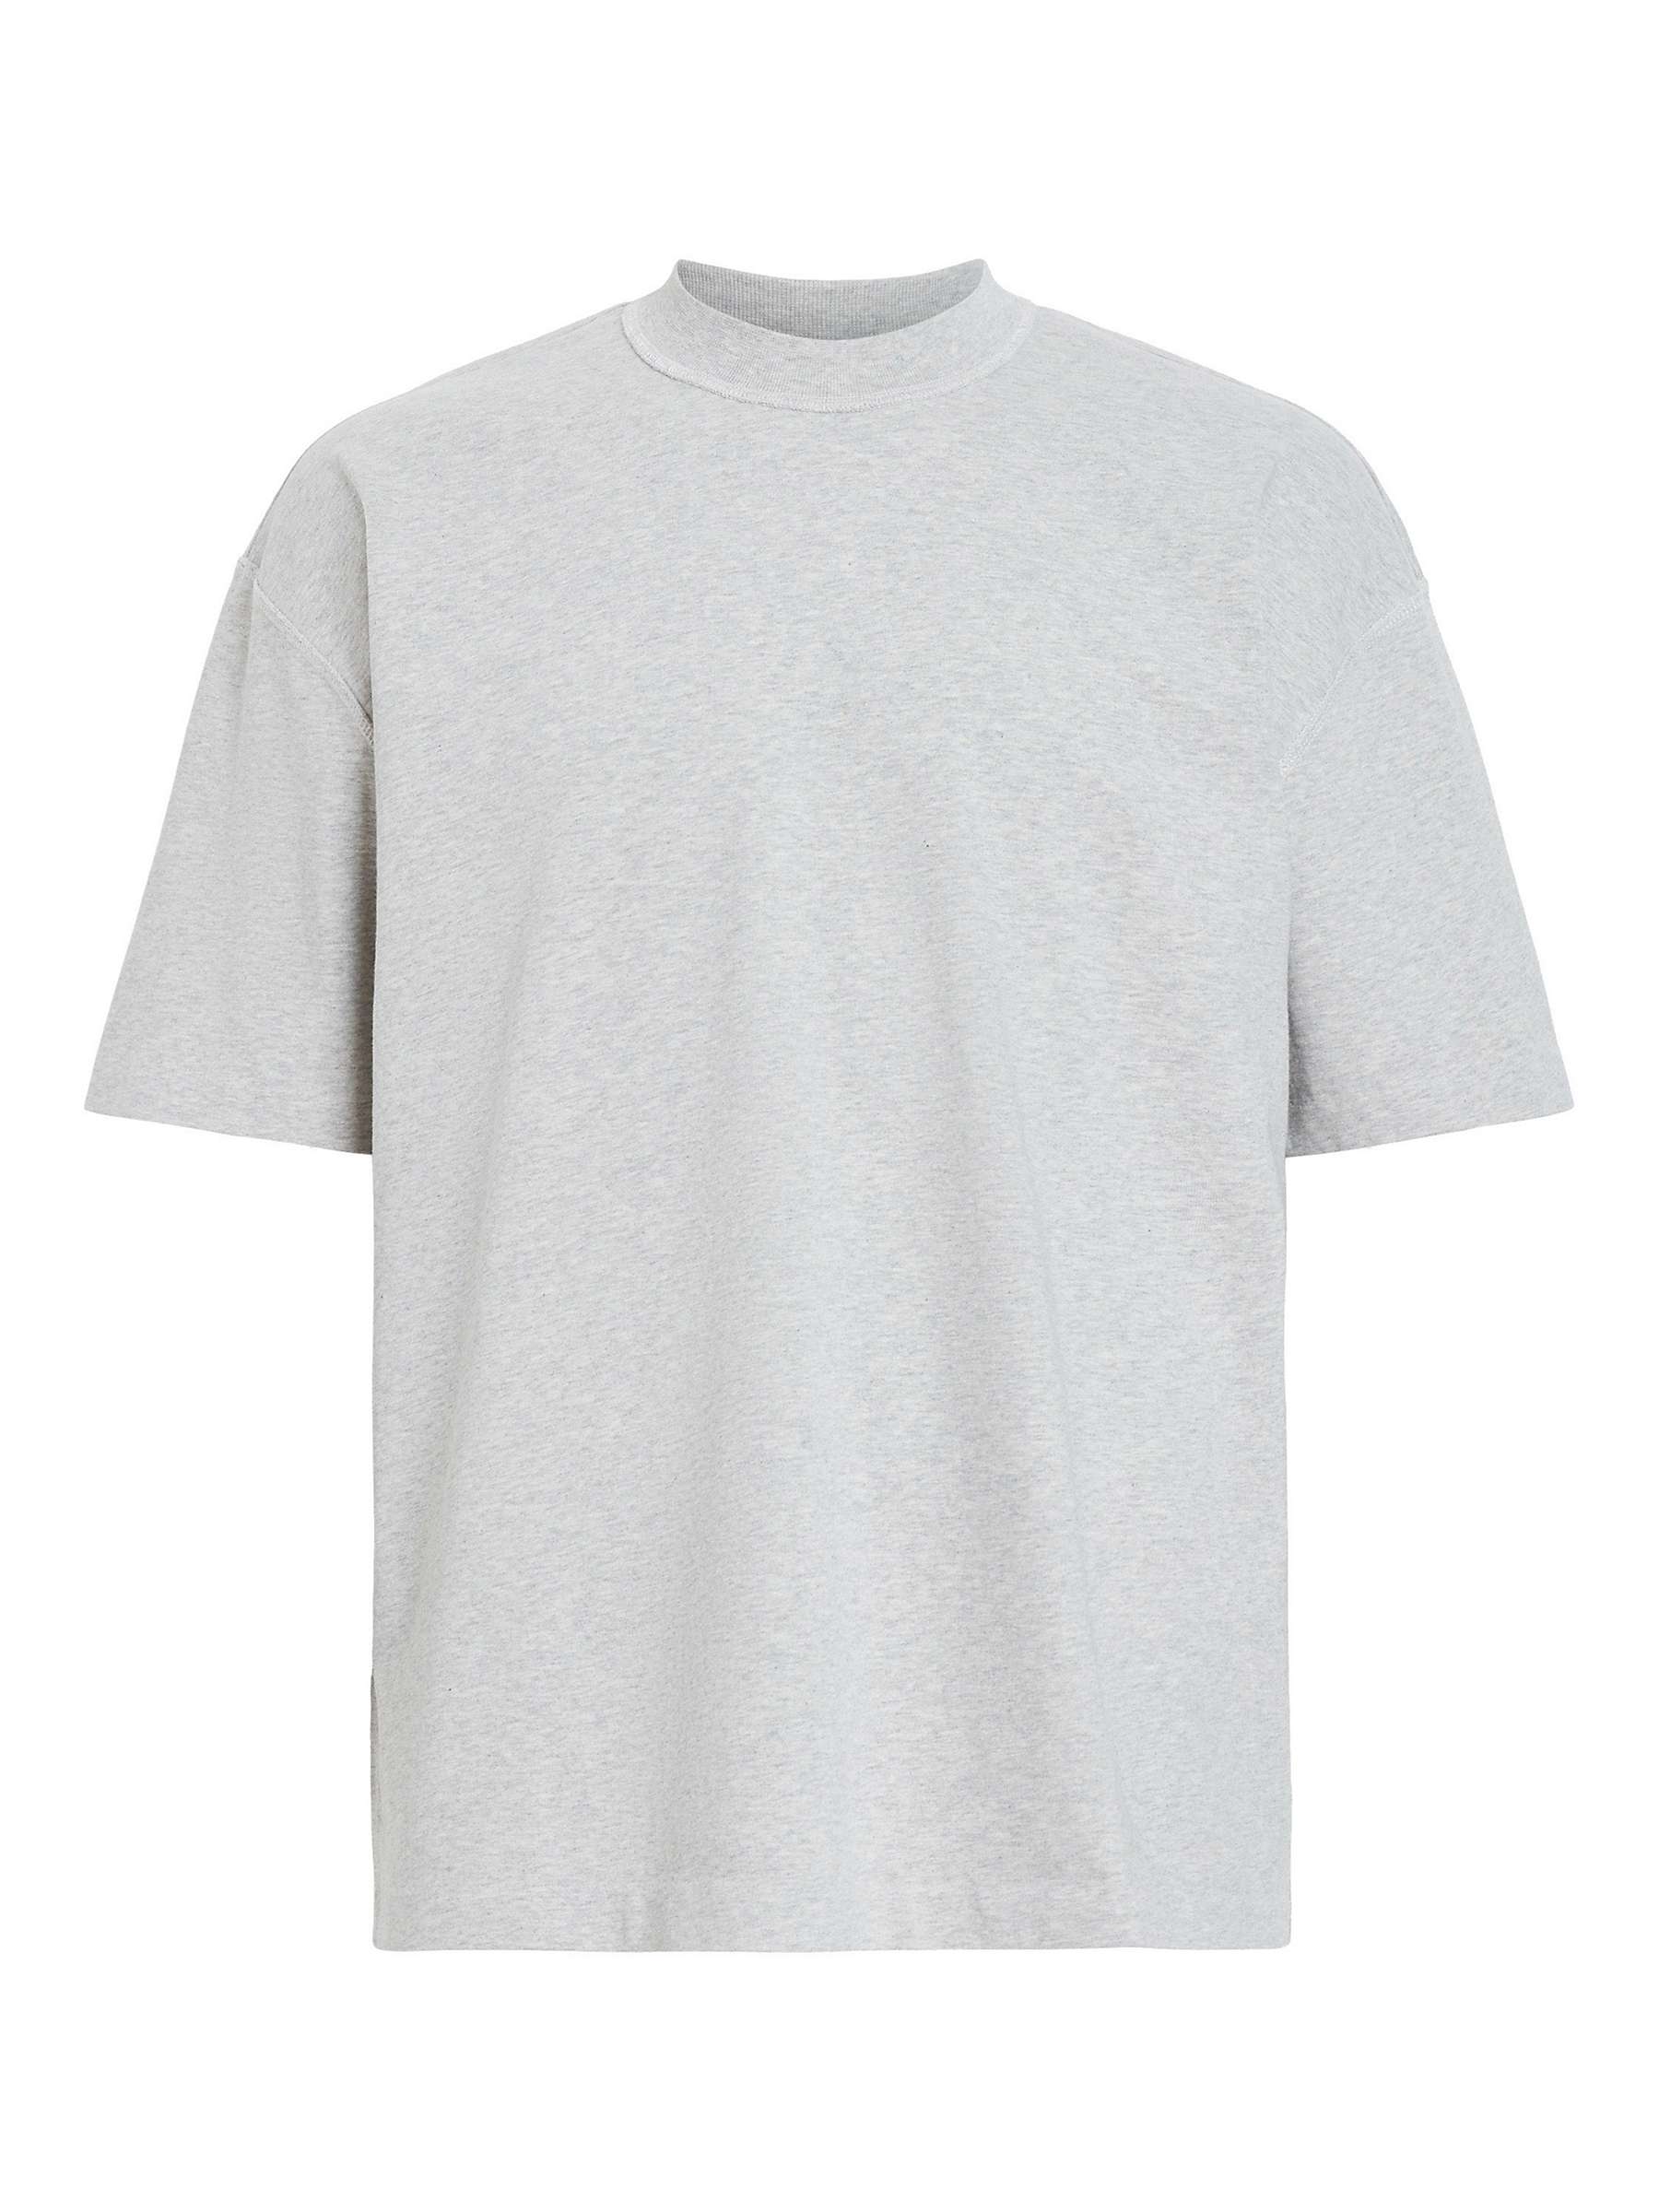 Buy AllSaints Isac Short Sleeve Crew Neck T-Shirt Online at johnlewis.com